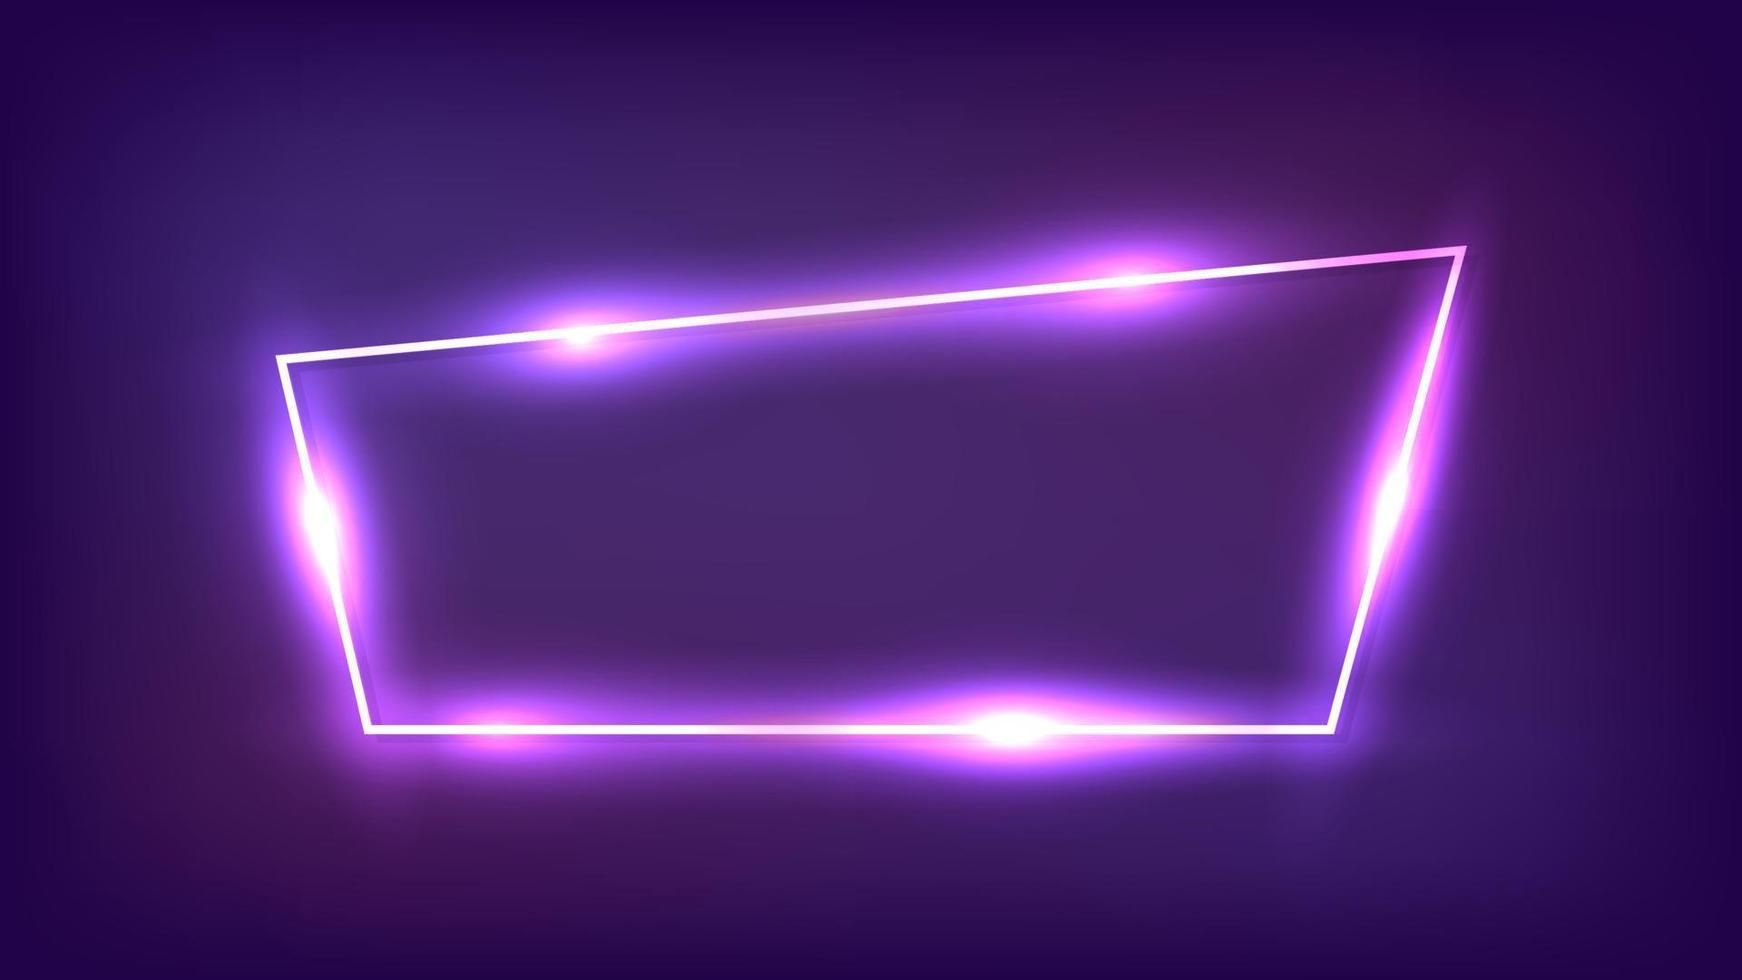 marco de neón con efectos brillantes sobre fondo oscuro. telón de fondo tecno brillante vacío. ilustración vectorial vector